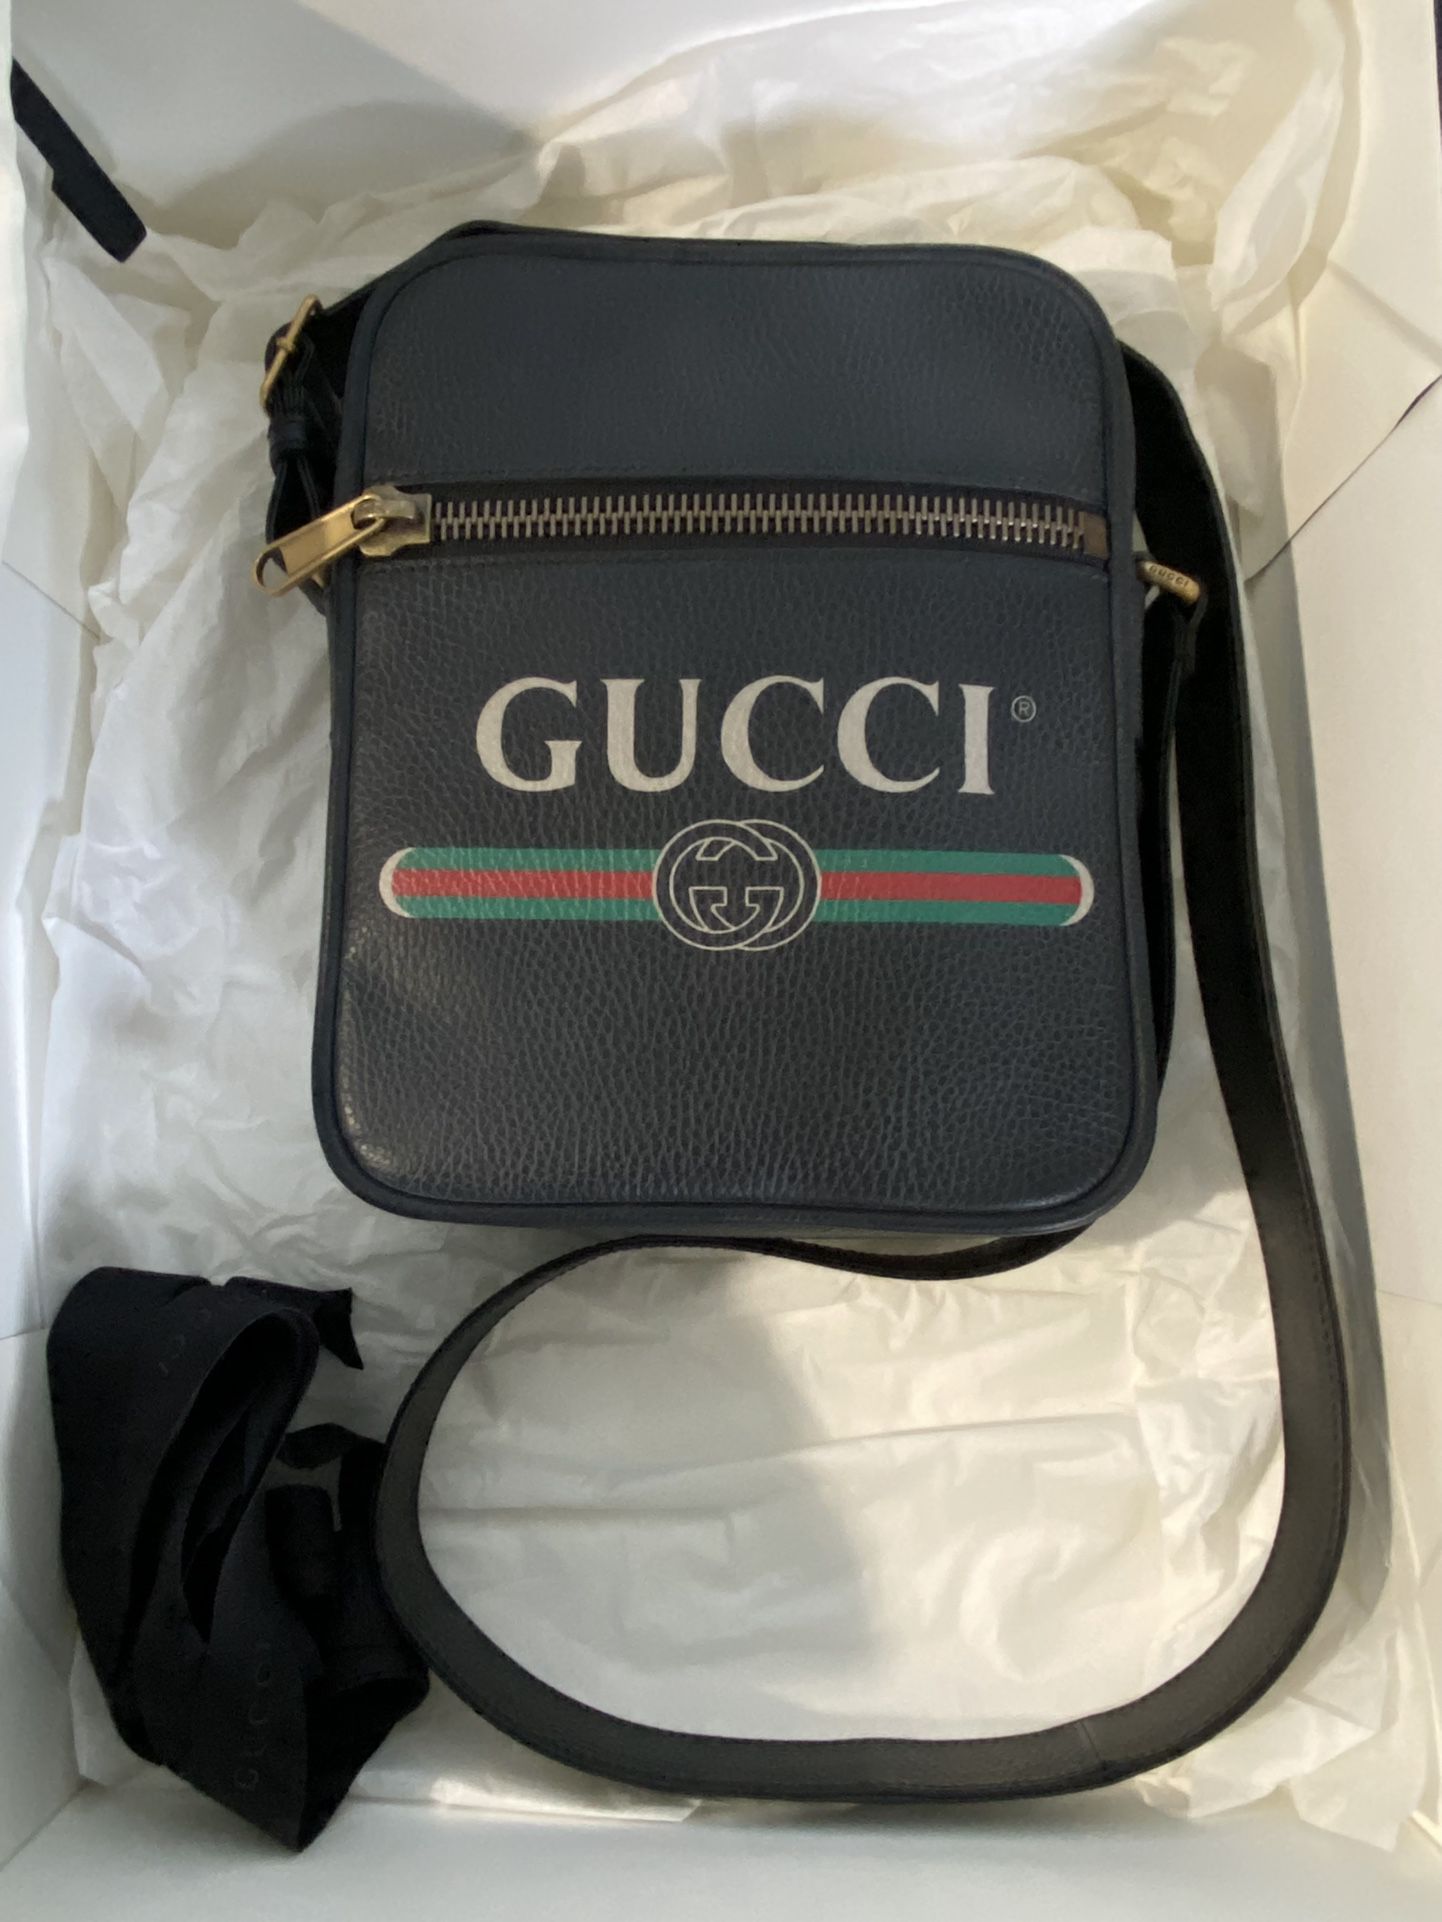 Gucci Mens Messenger Bag With Original Packaging